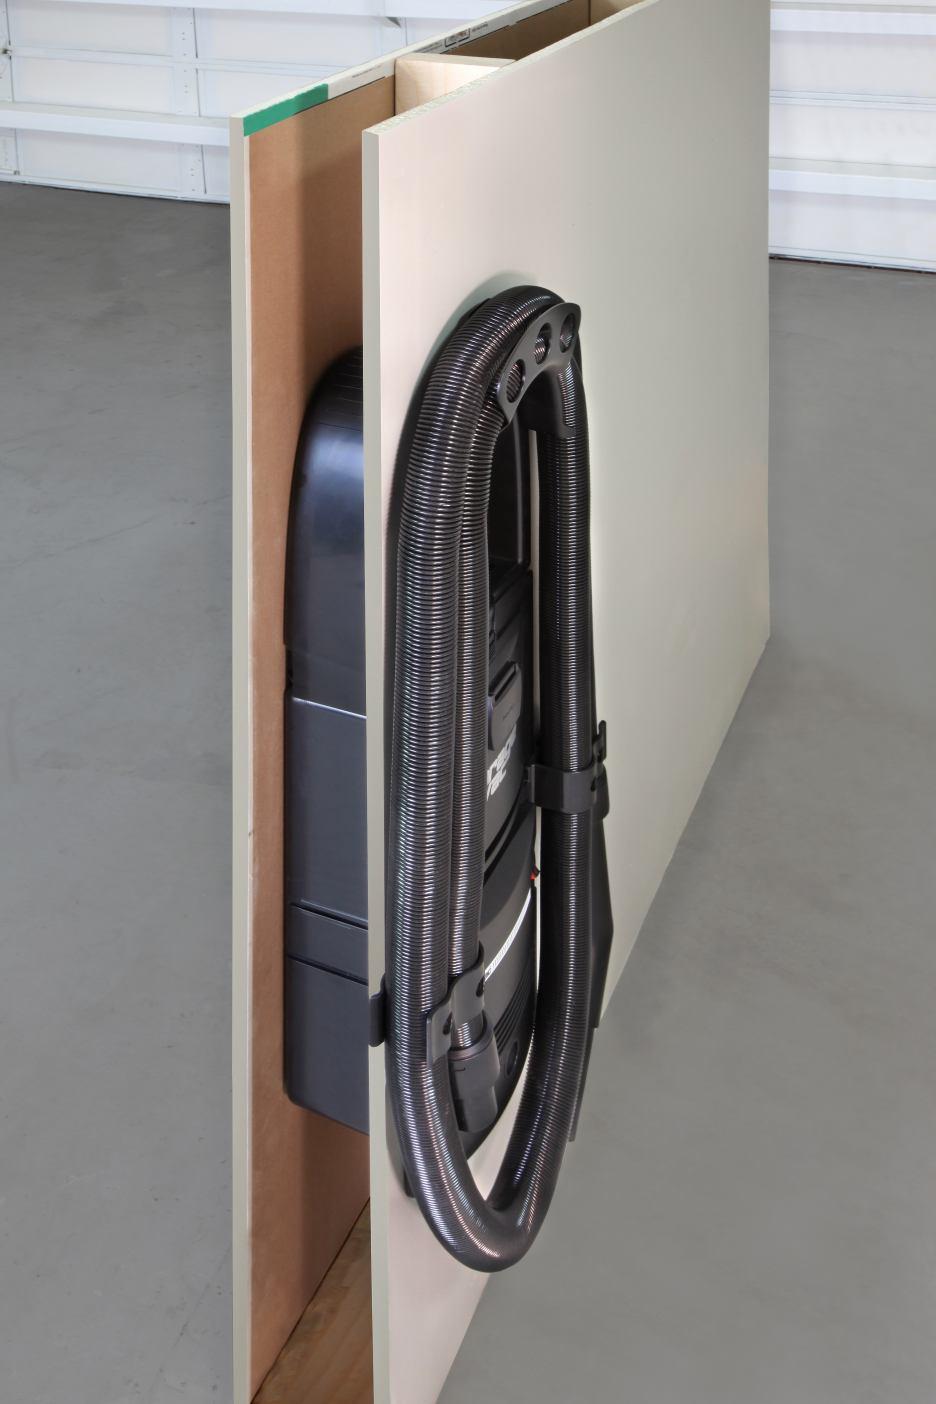 GarageVac Models GF-120 In-wall installation where the unit fits flush into a 2x4 stud wall.